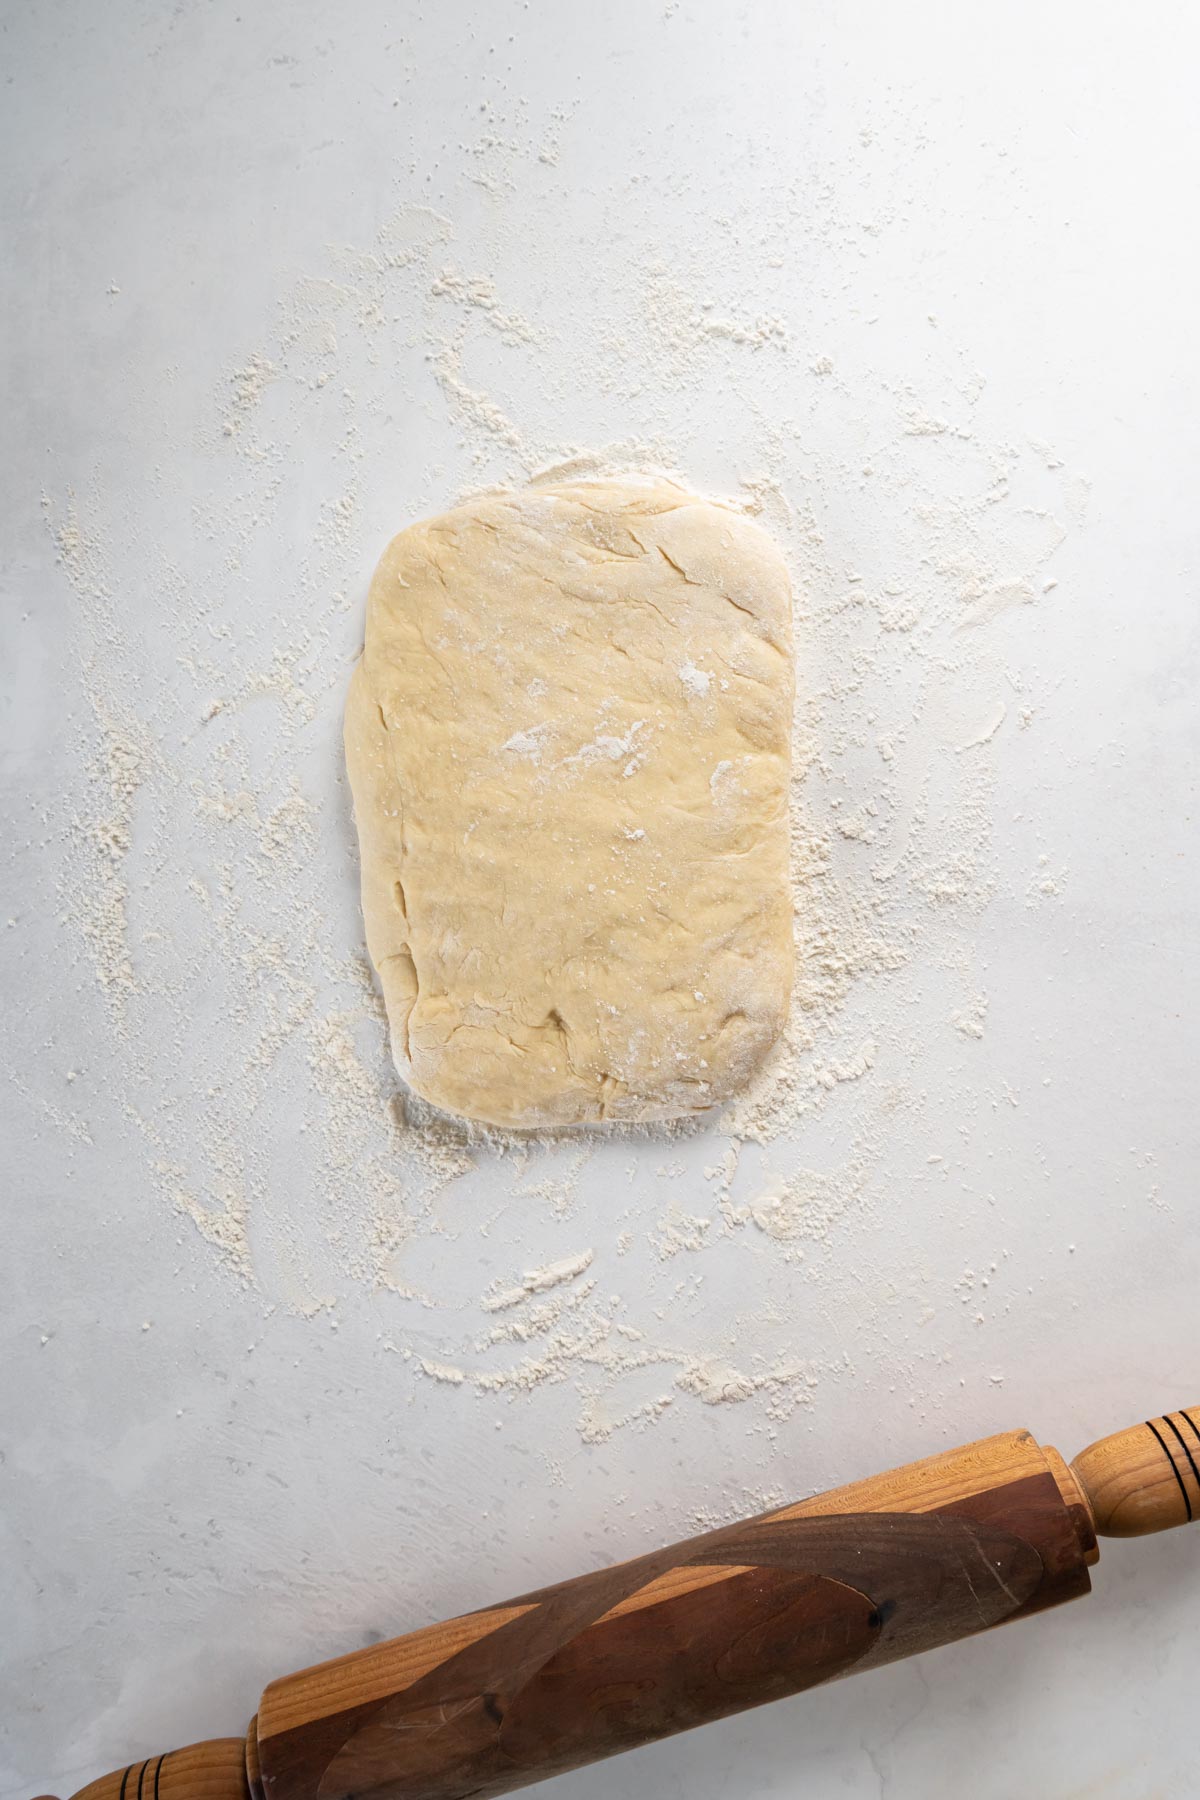 Dough shaped into small rectangle.